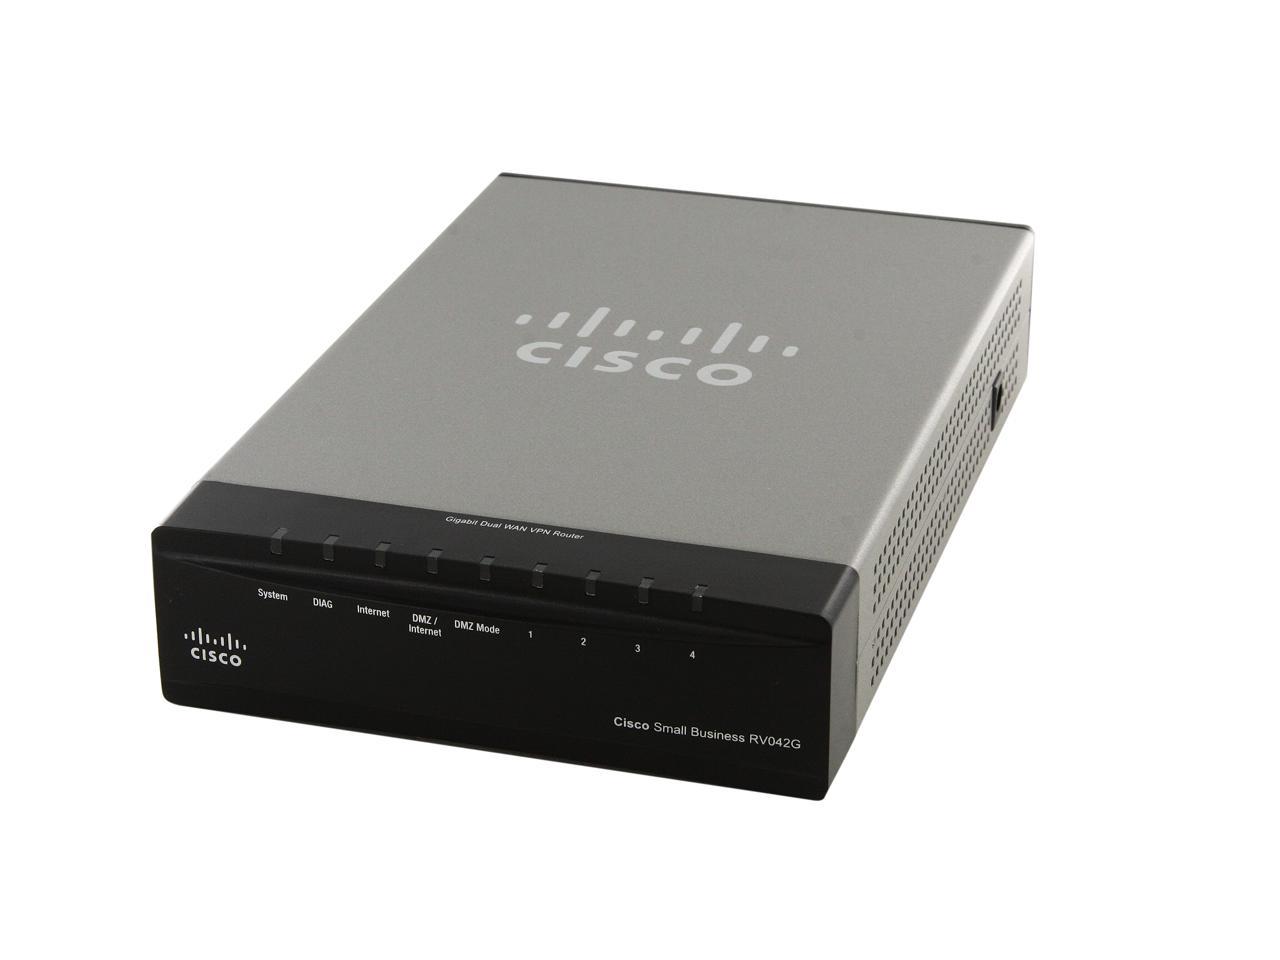 Cisco RV042G Dual Gigabit WAN VPN Router 4-port switch IPv6 50 VPN tunnels 